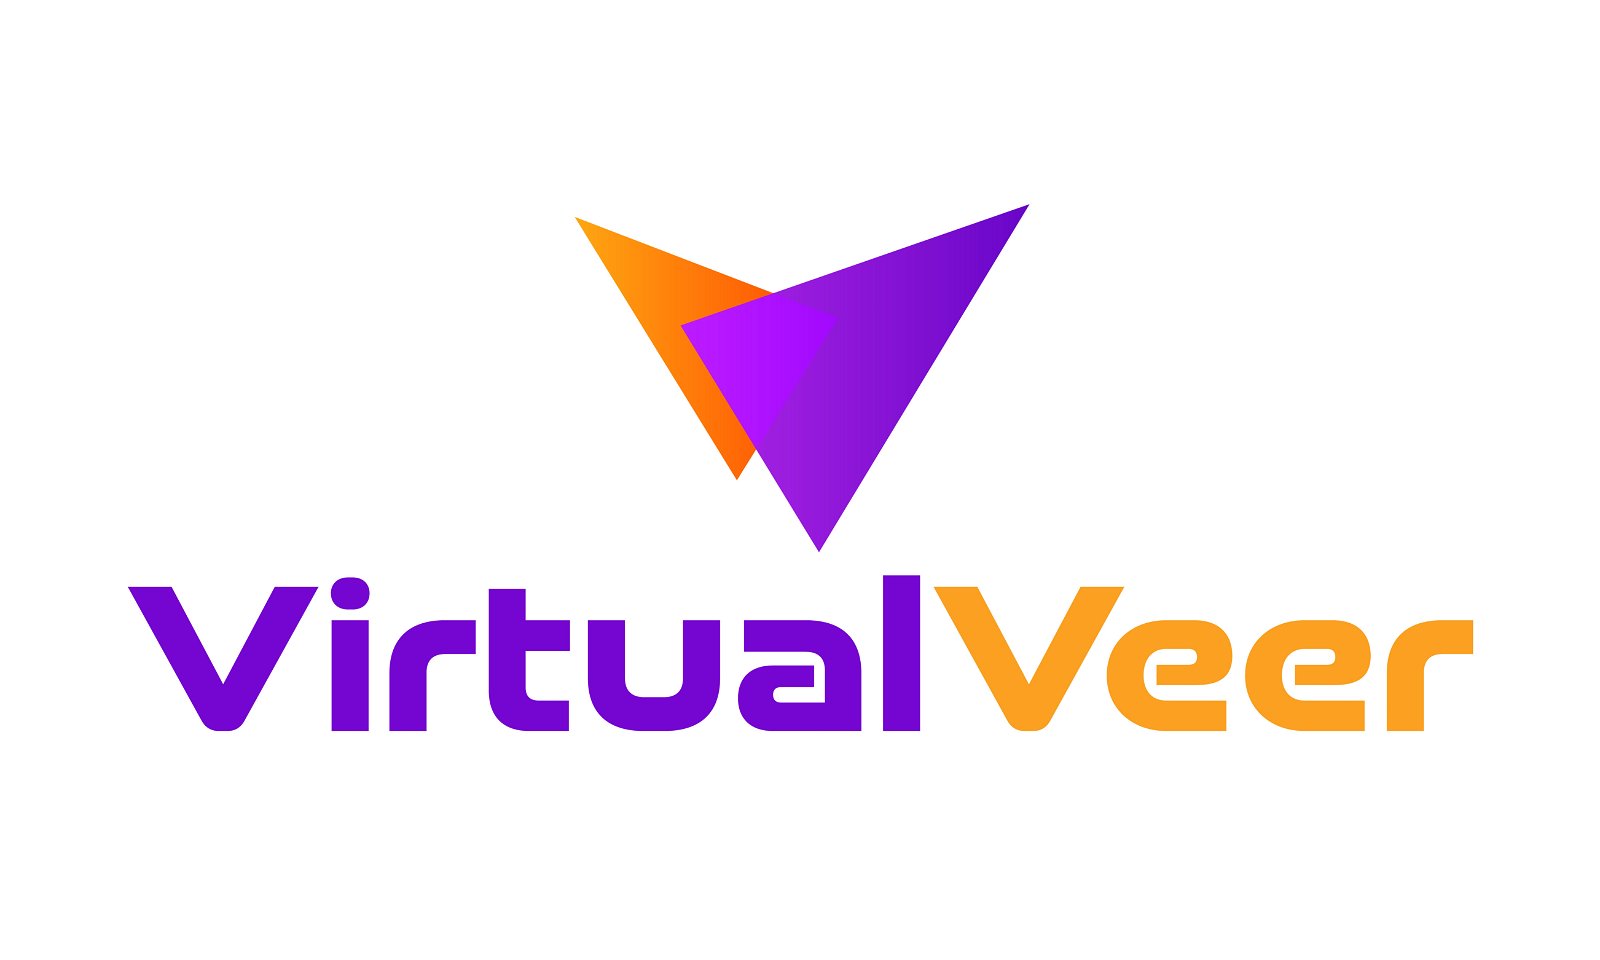 VirtualVeer.com - Creative brandable domain for sale